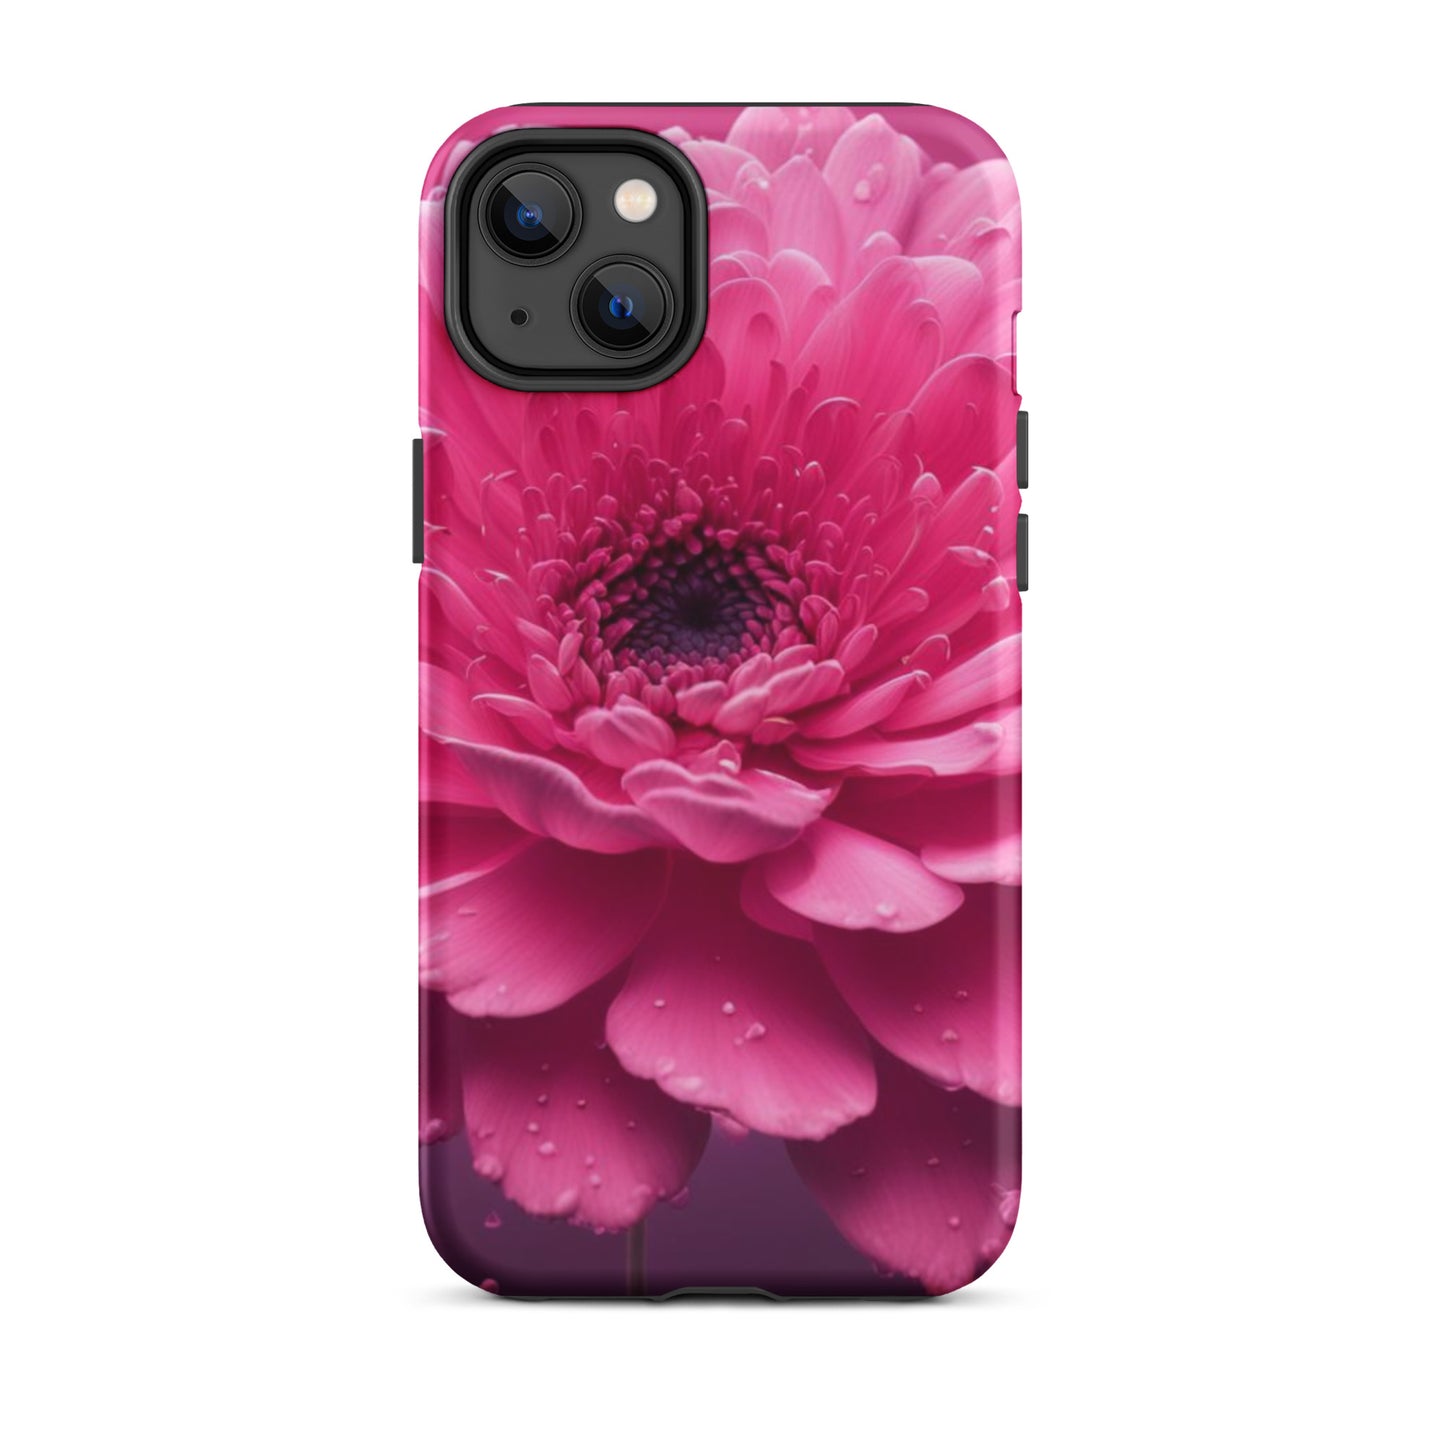 Vibrant Floral iPhone® Case